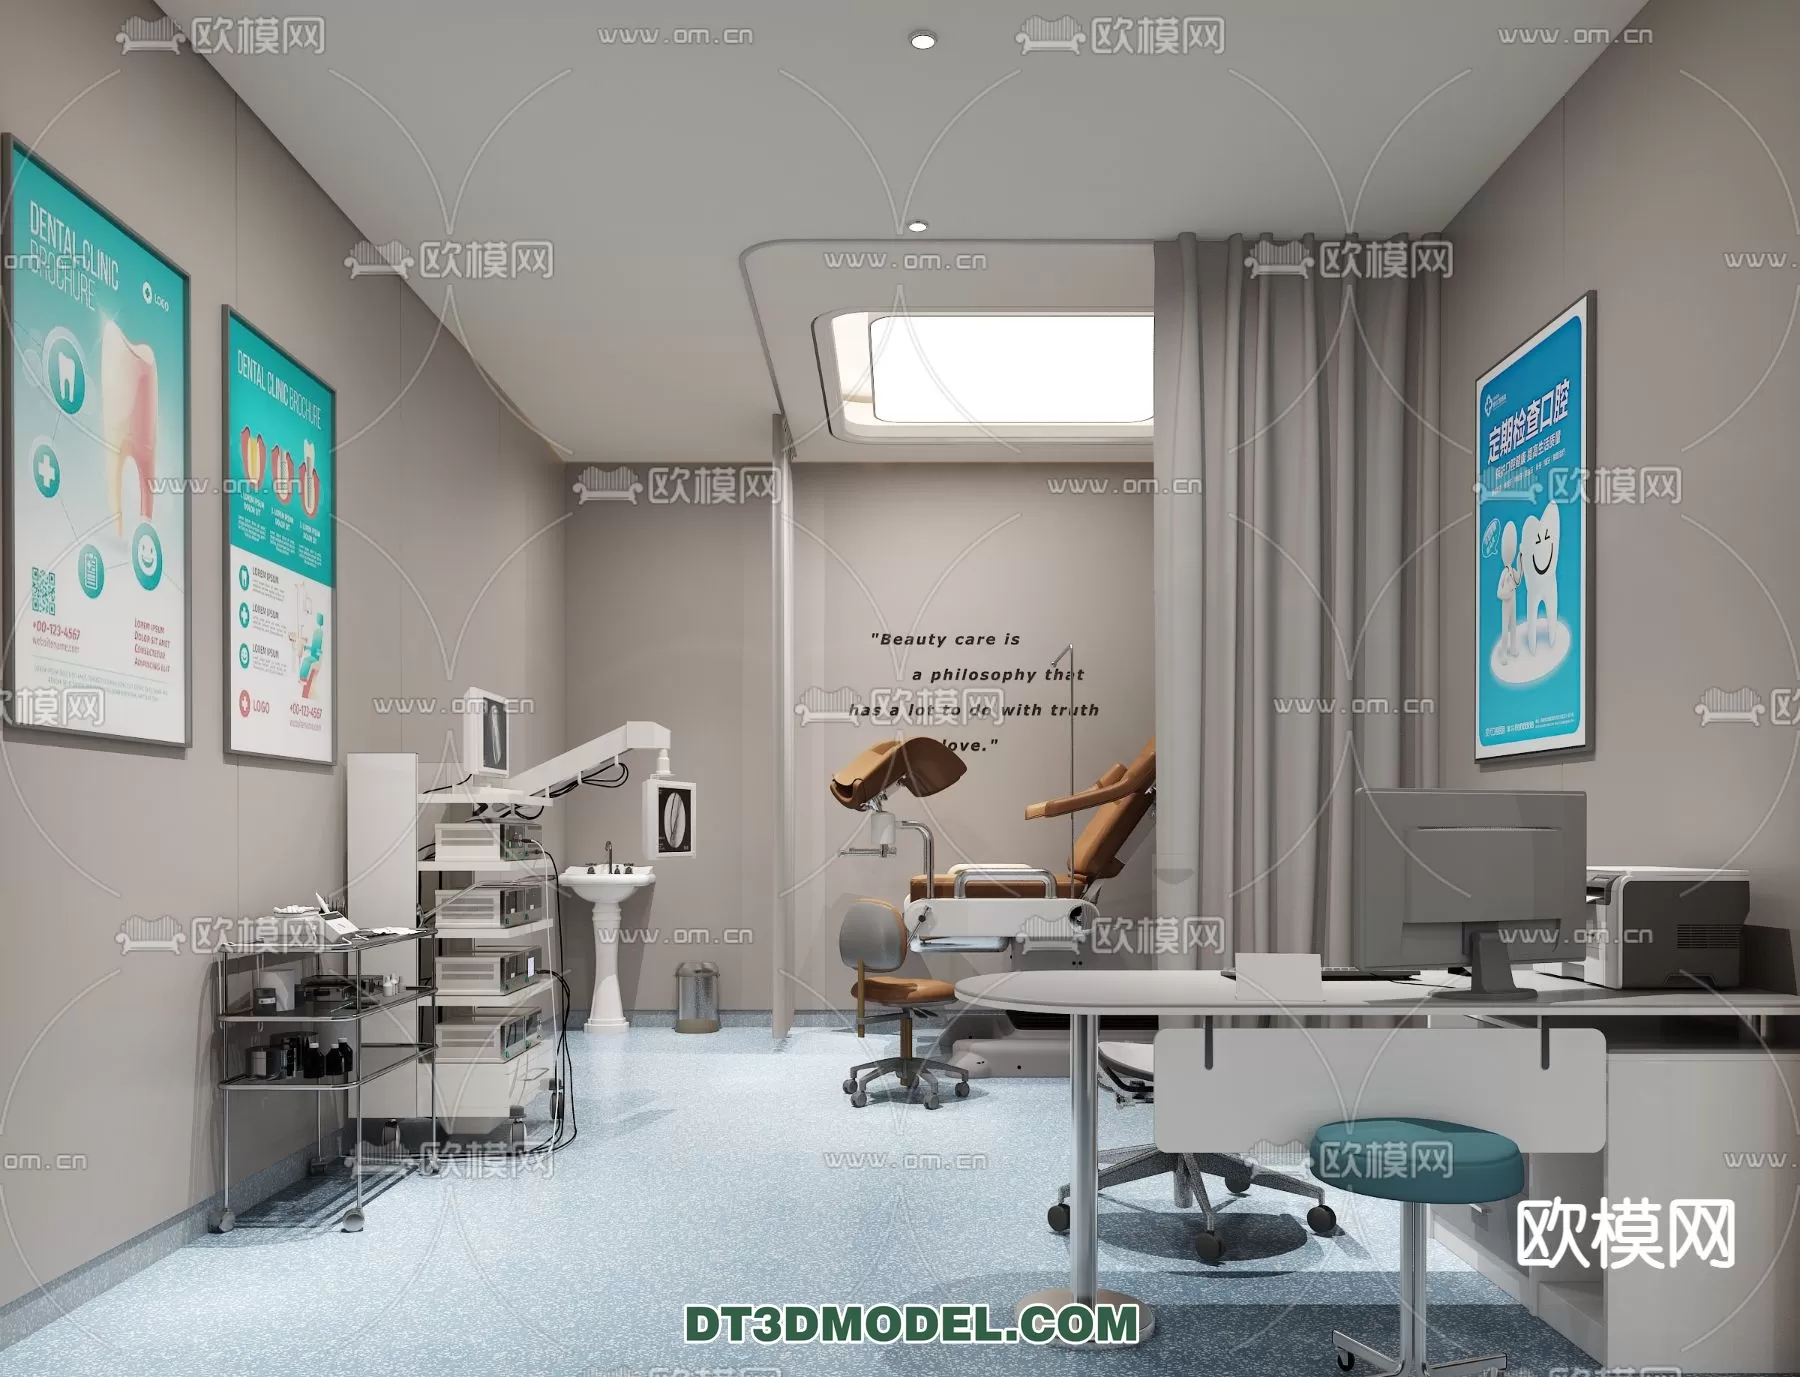 HOSPITAL 3D SCENES – MODERN – 0180